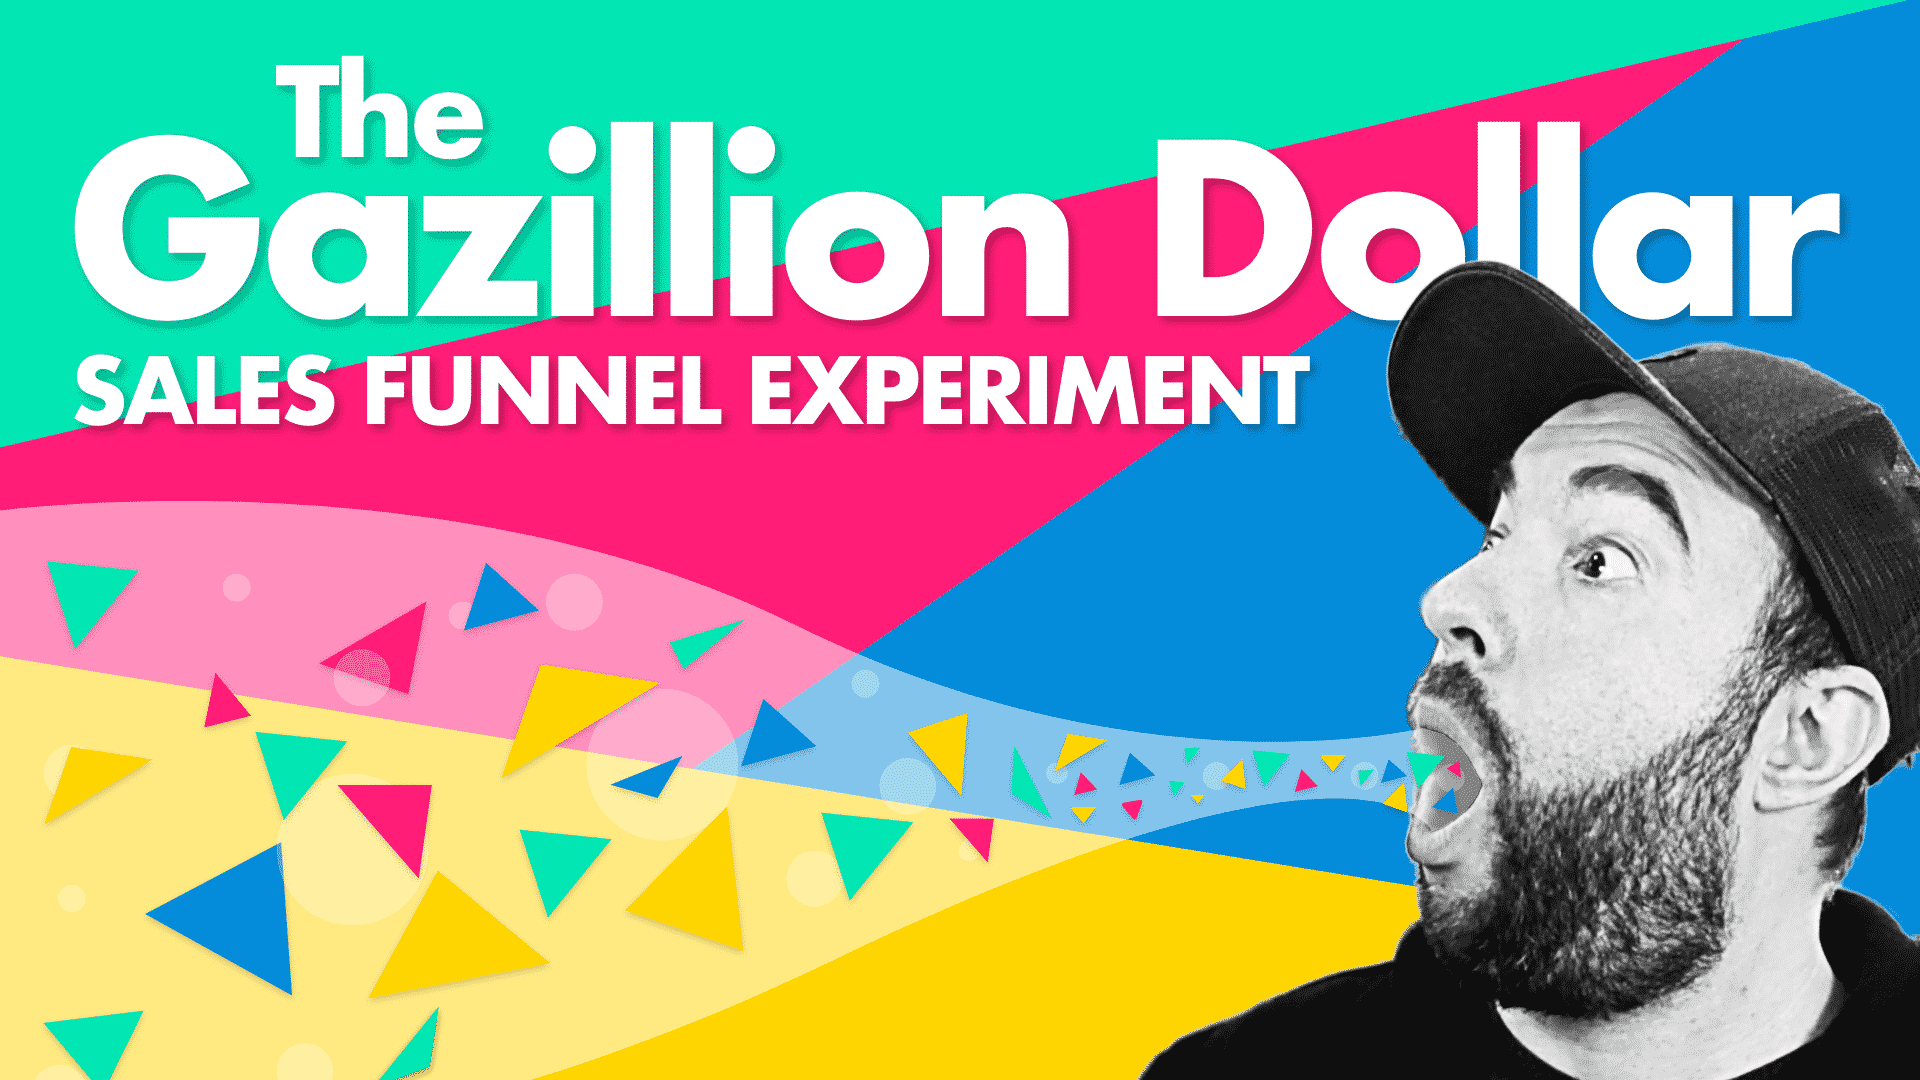 The Gazillion Dollar Sales Funnel Experiment